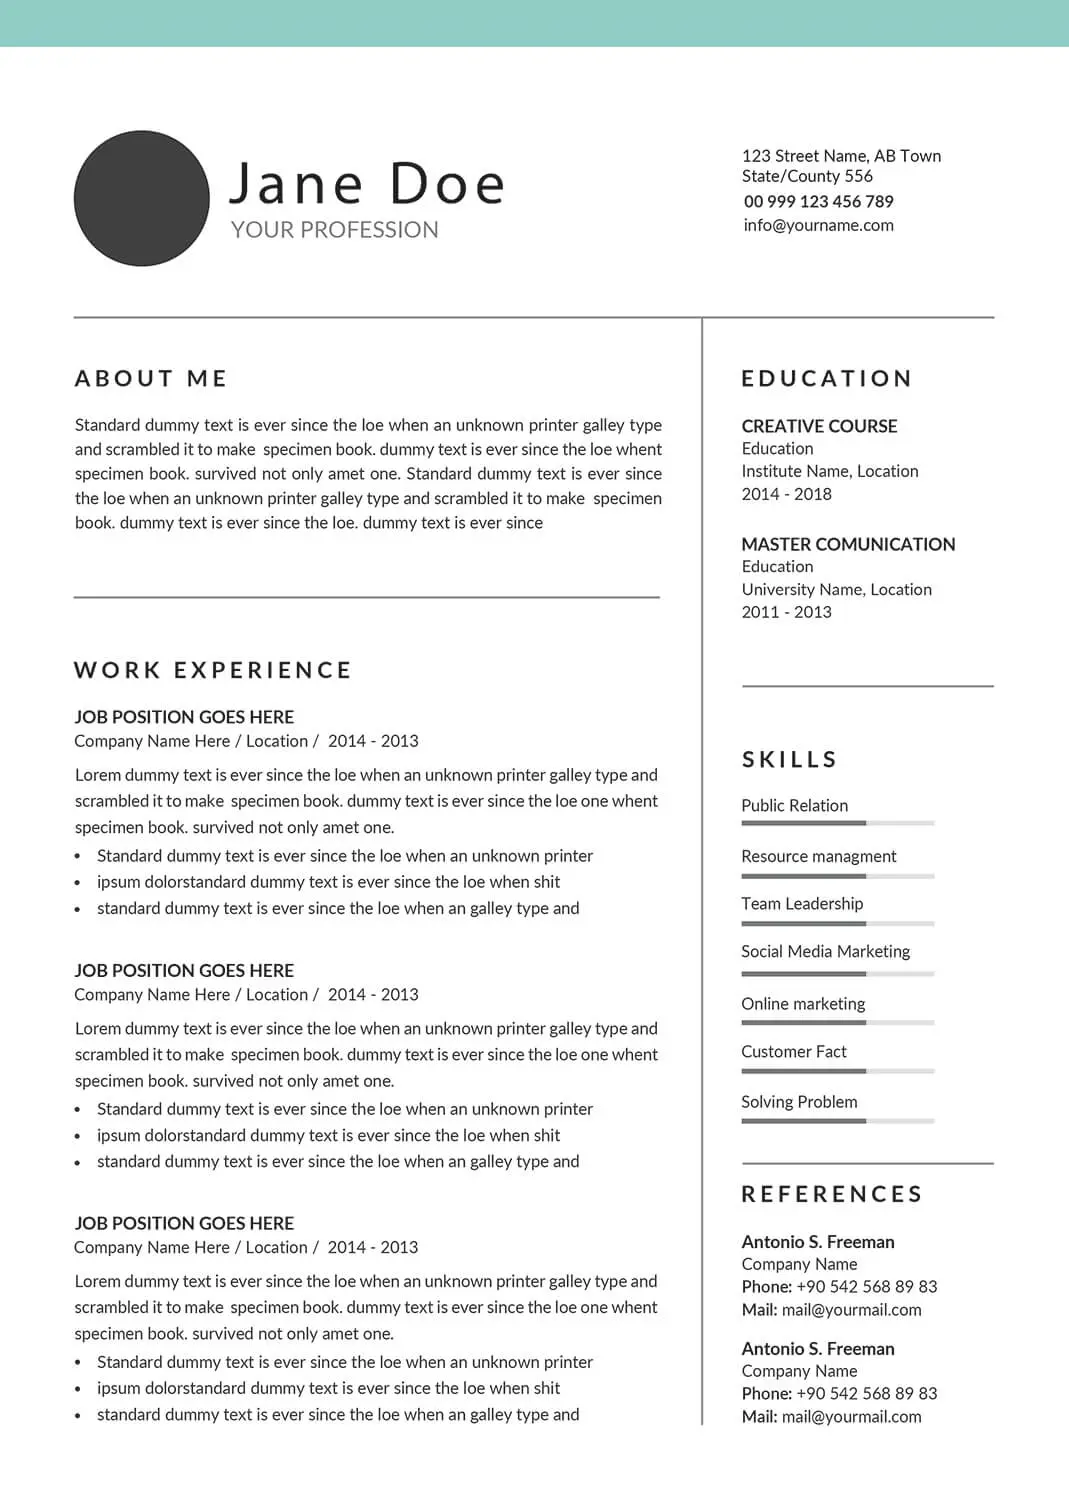 digital-marketing-resume